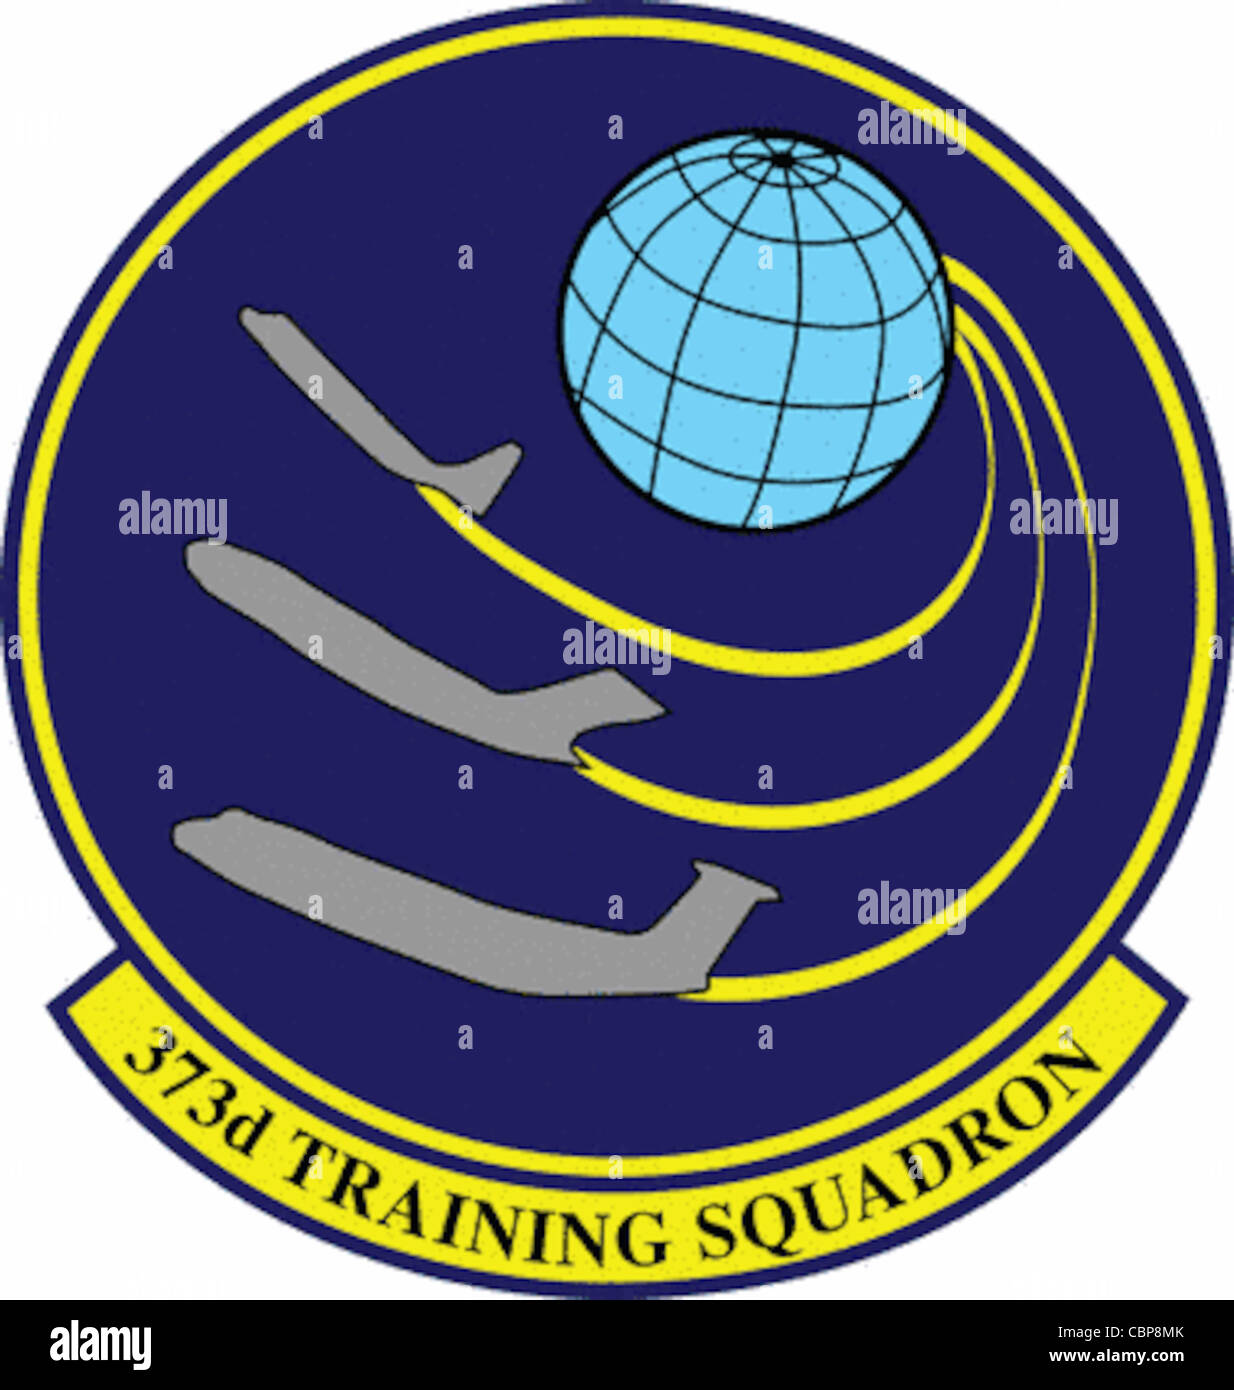 373d Training Squadron Clip Art Stock Photo